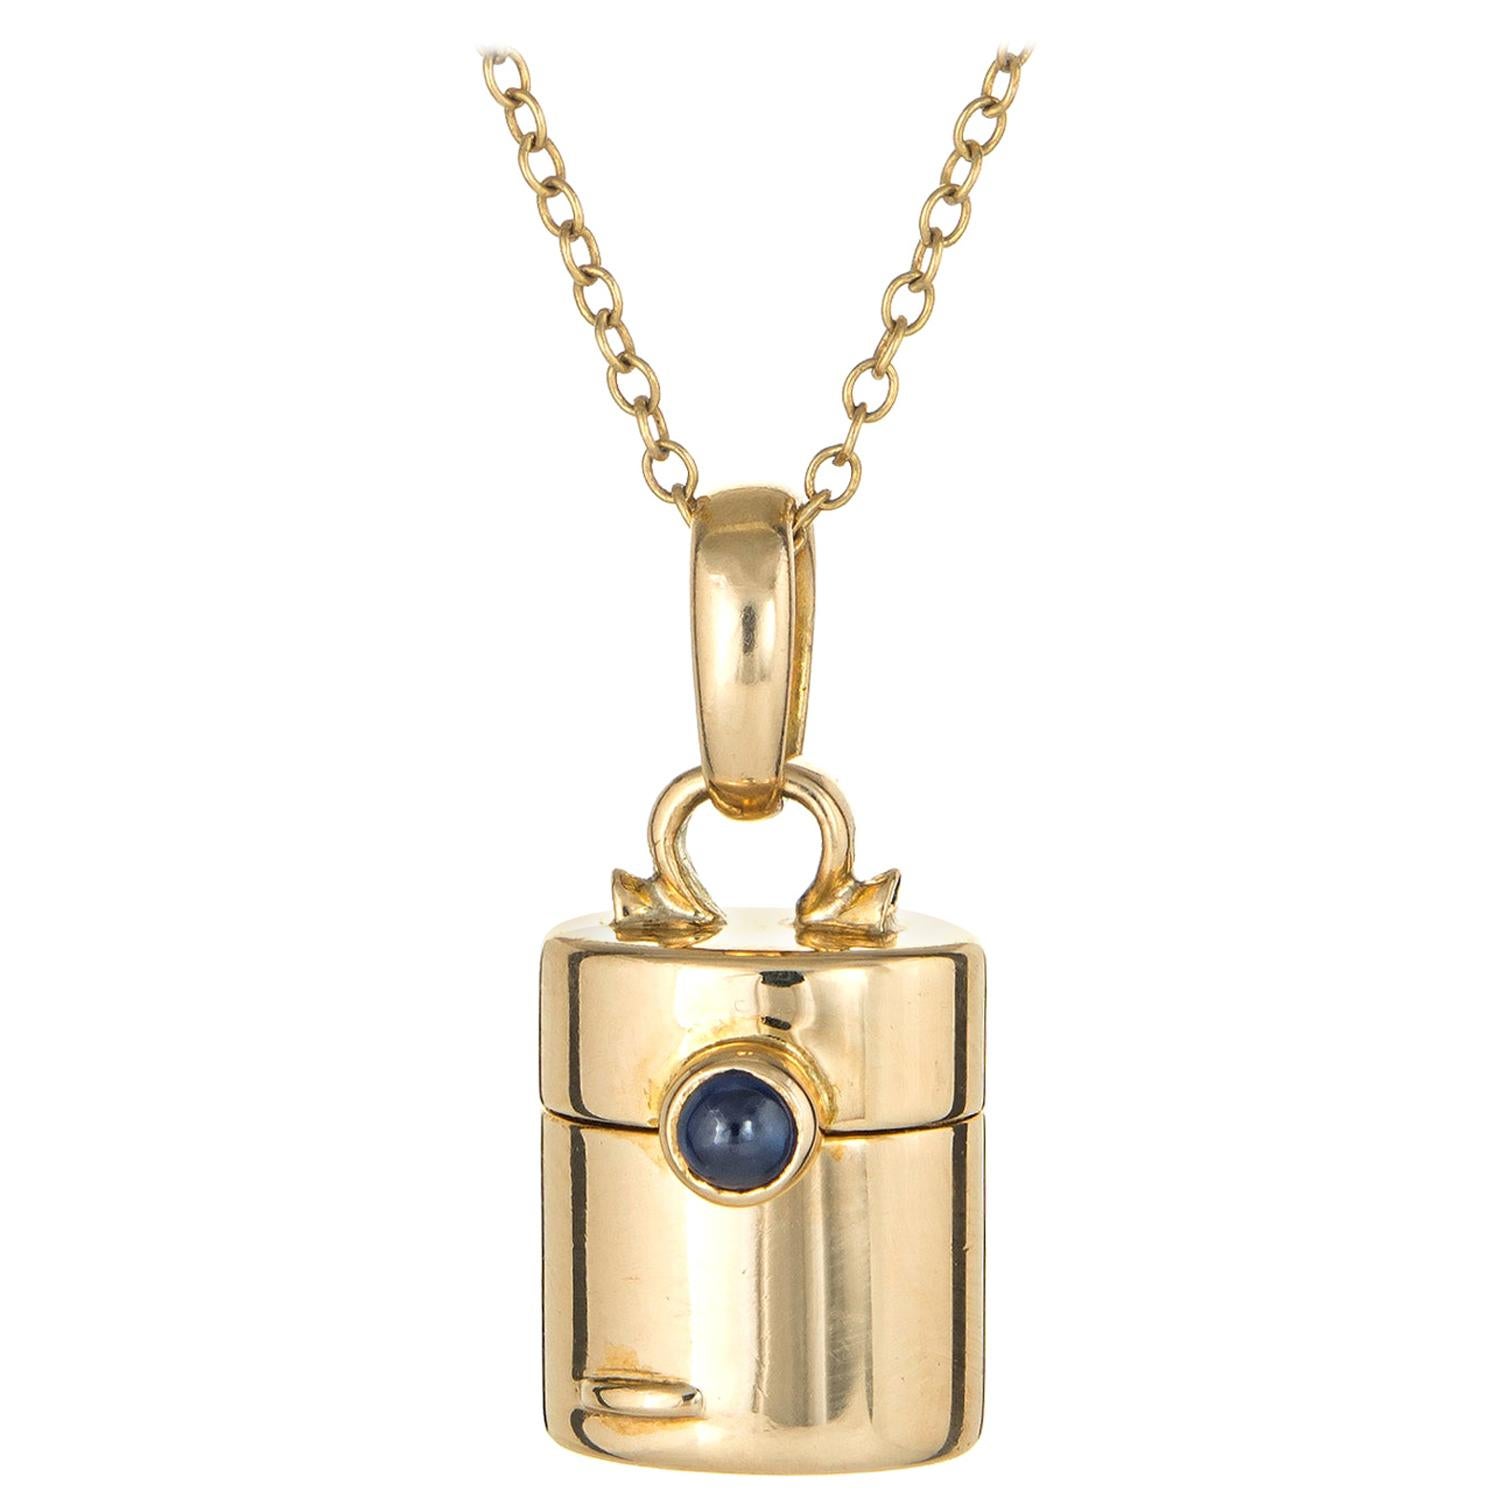 Tiffany & Co. Pillbox Charm Necklace Vintage 18 Karat Gold Secret Compartment